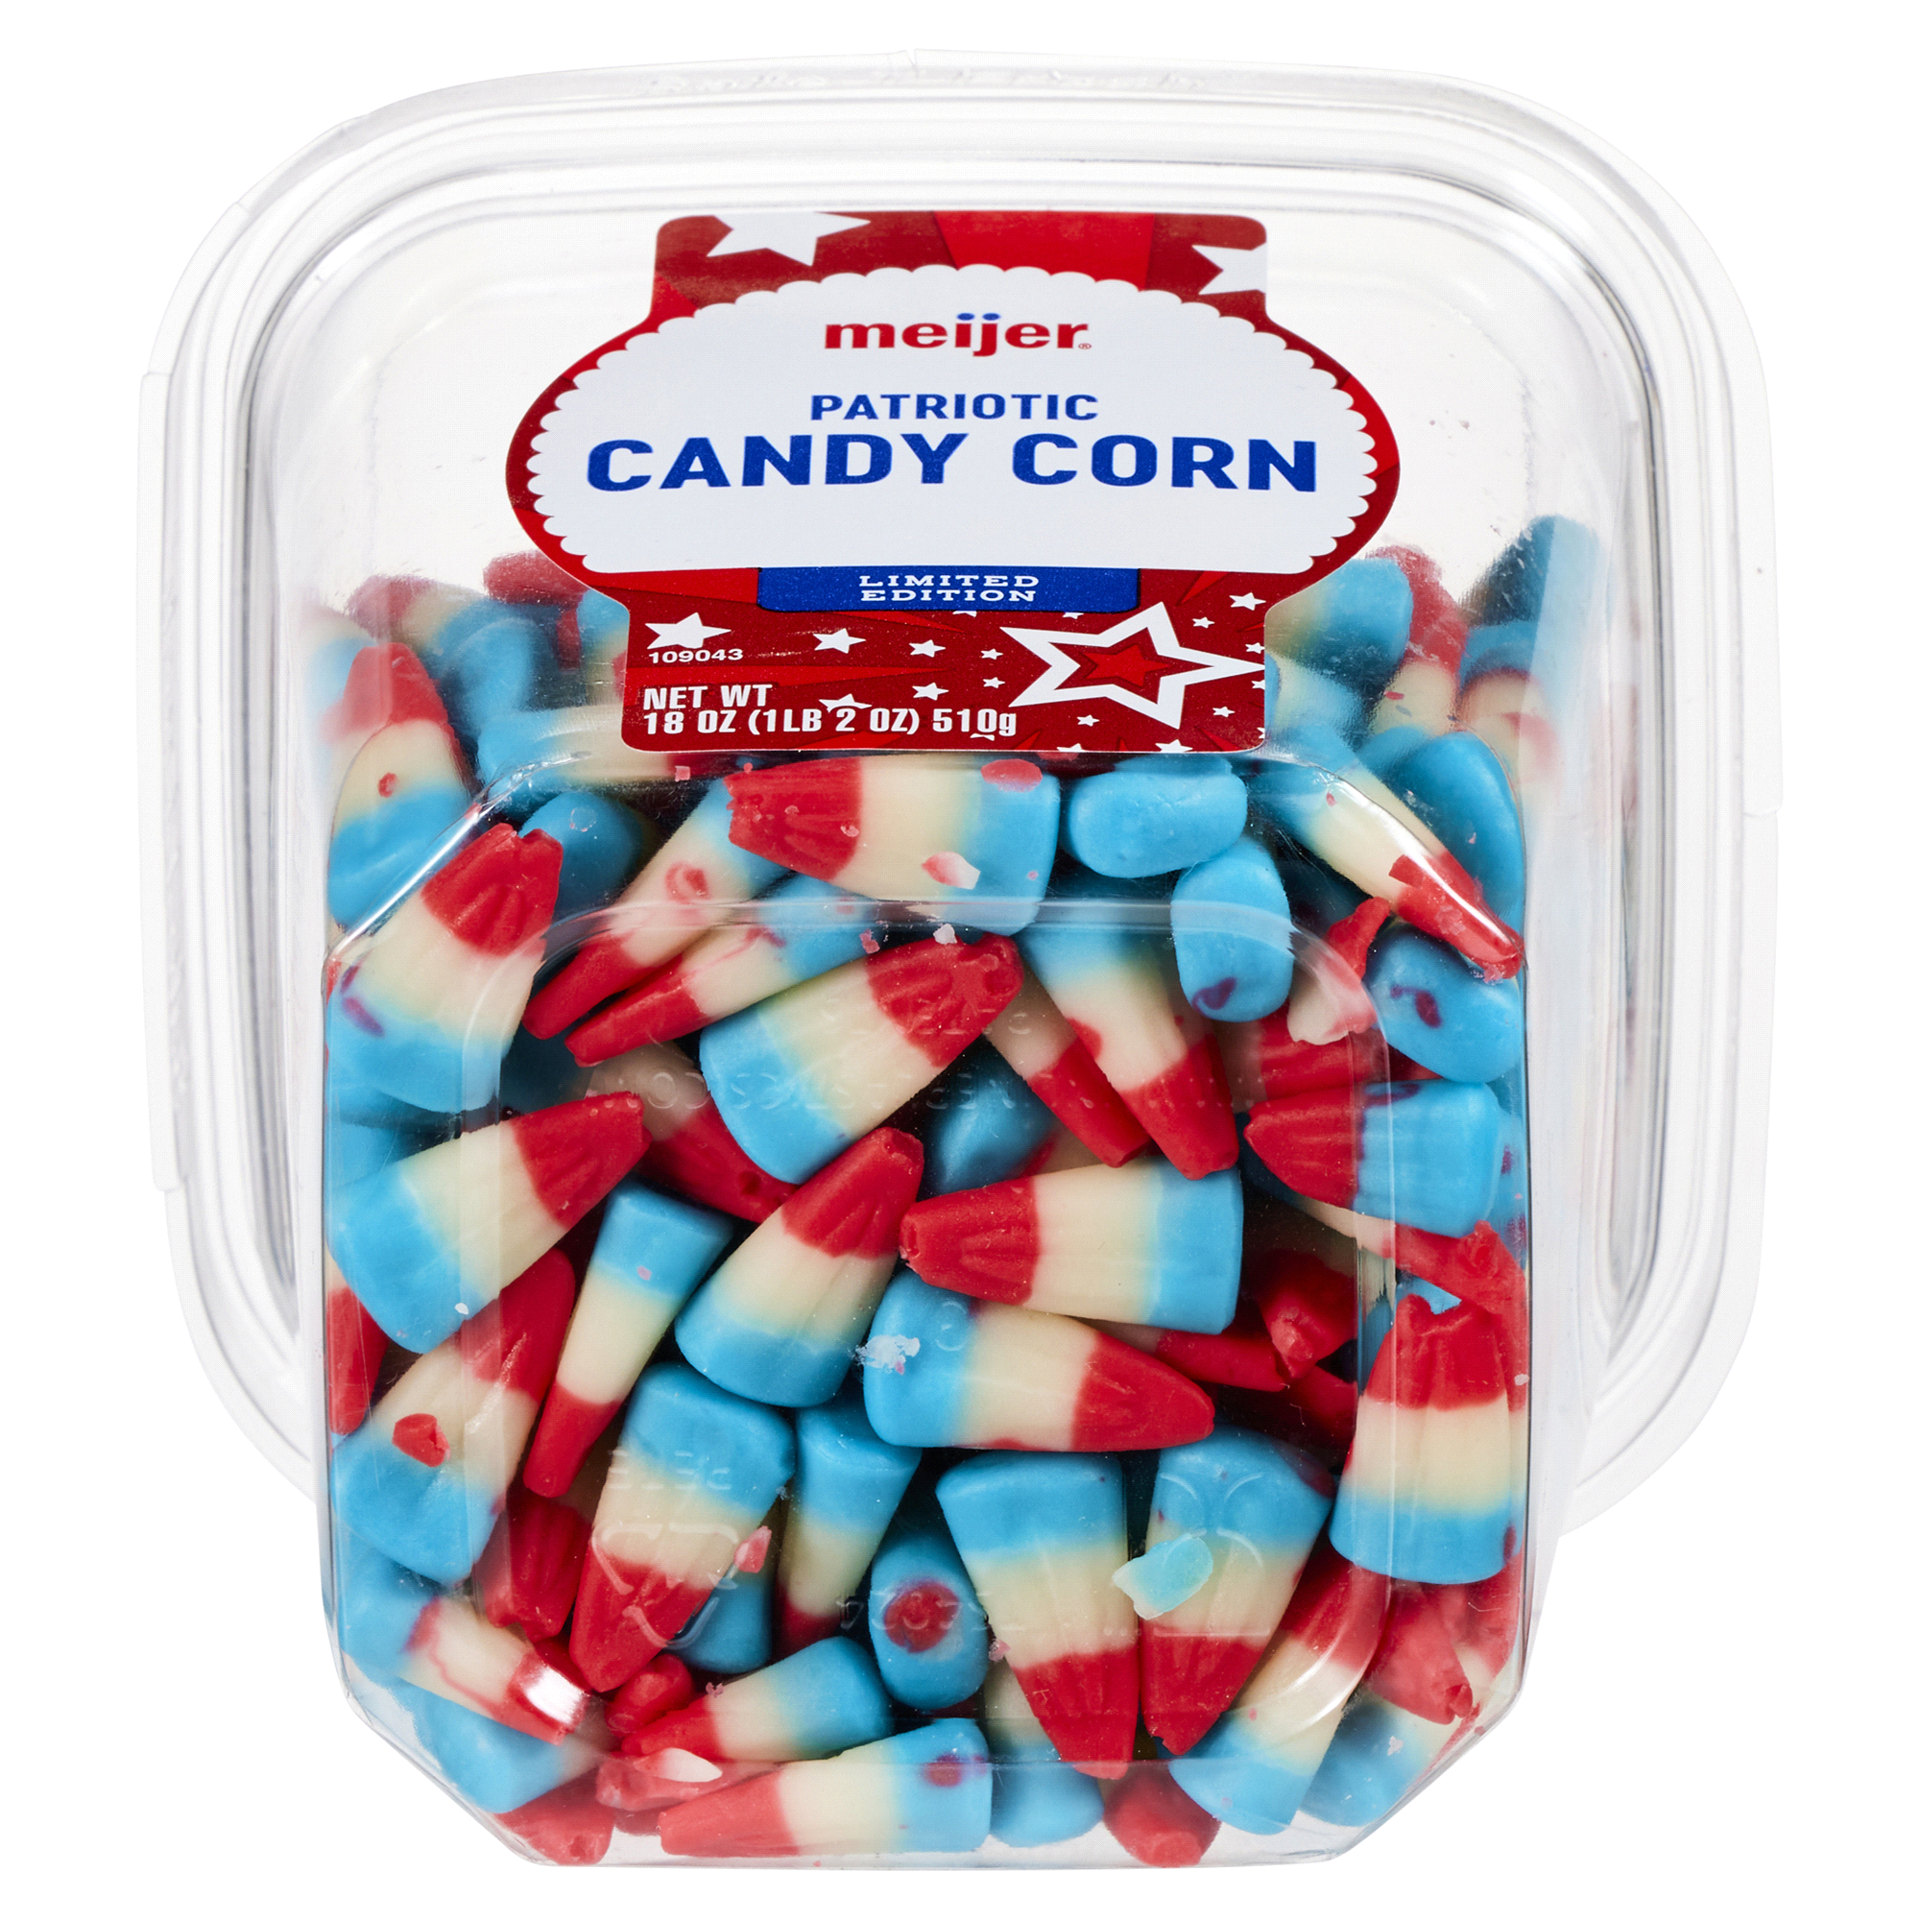 Hy-Vee Candy Corn 14 oz